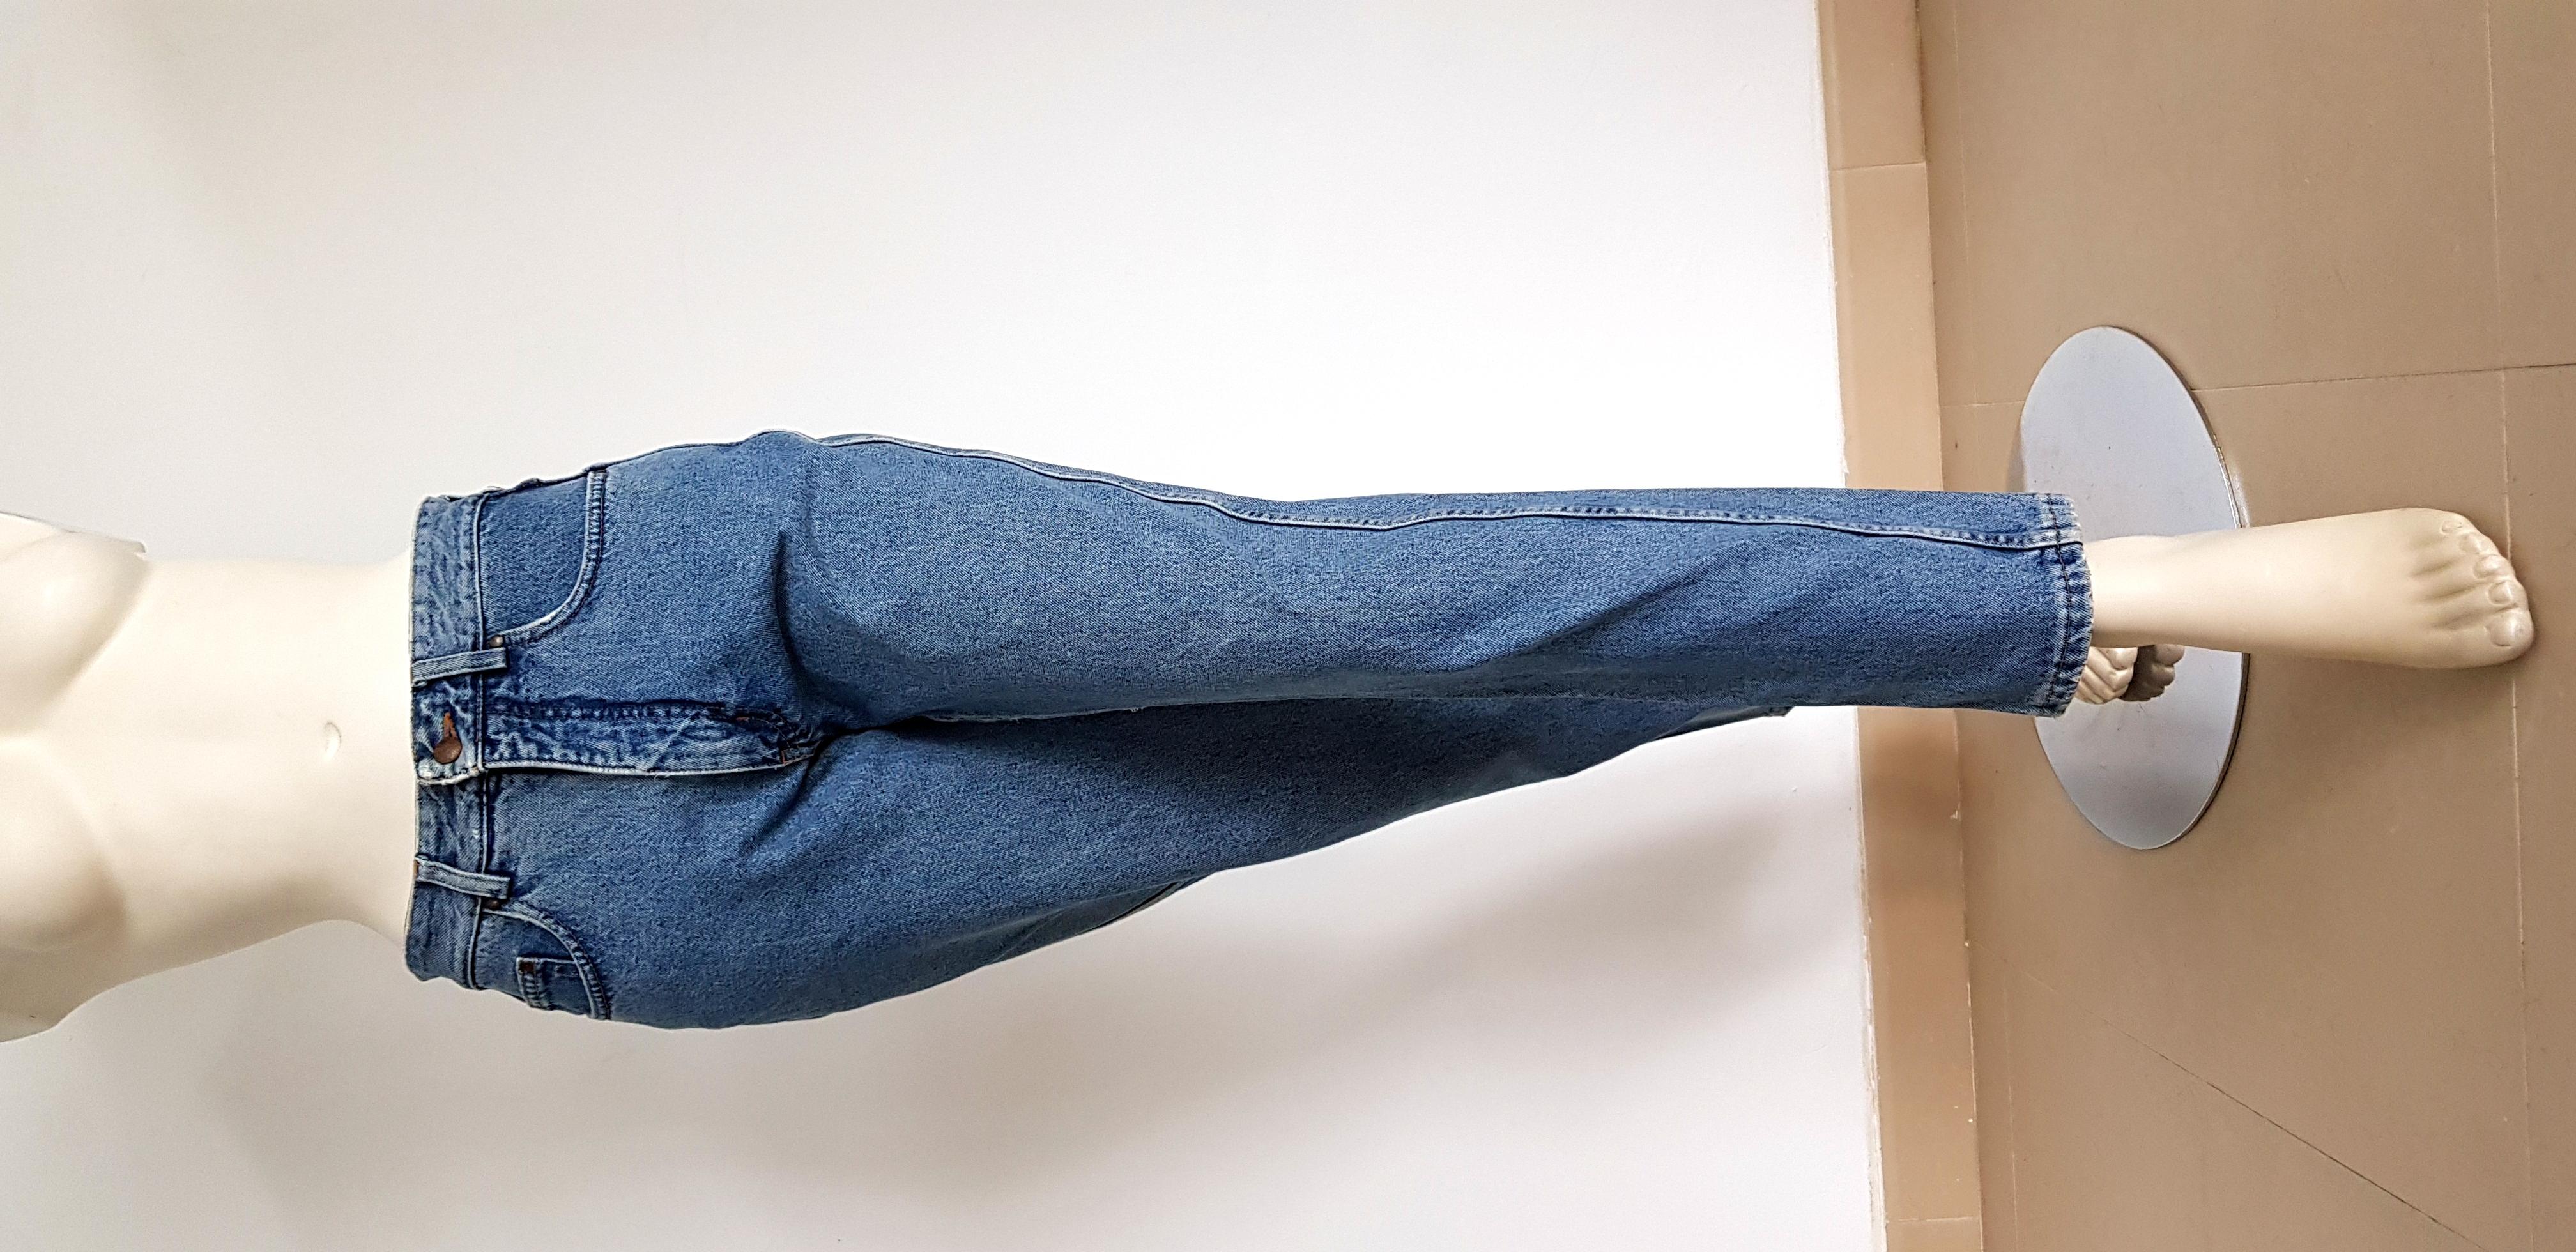 Blue Katharine HAMNETT Jeans Size S / M - Unworn, New For Sale